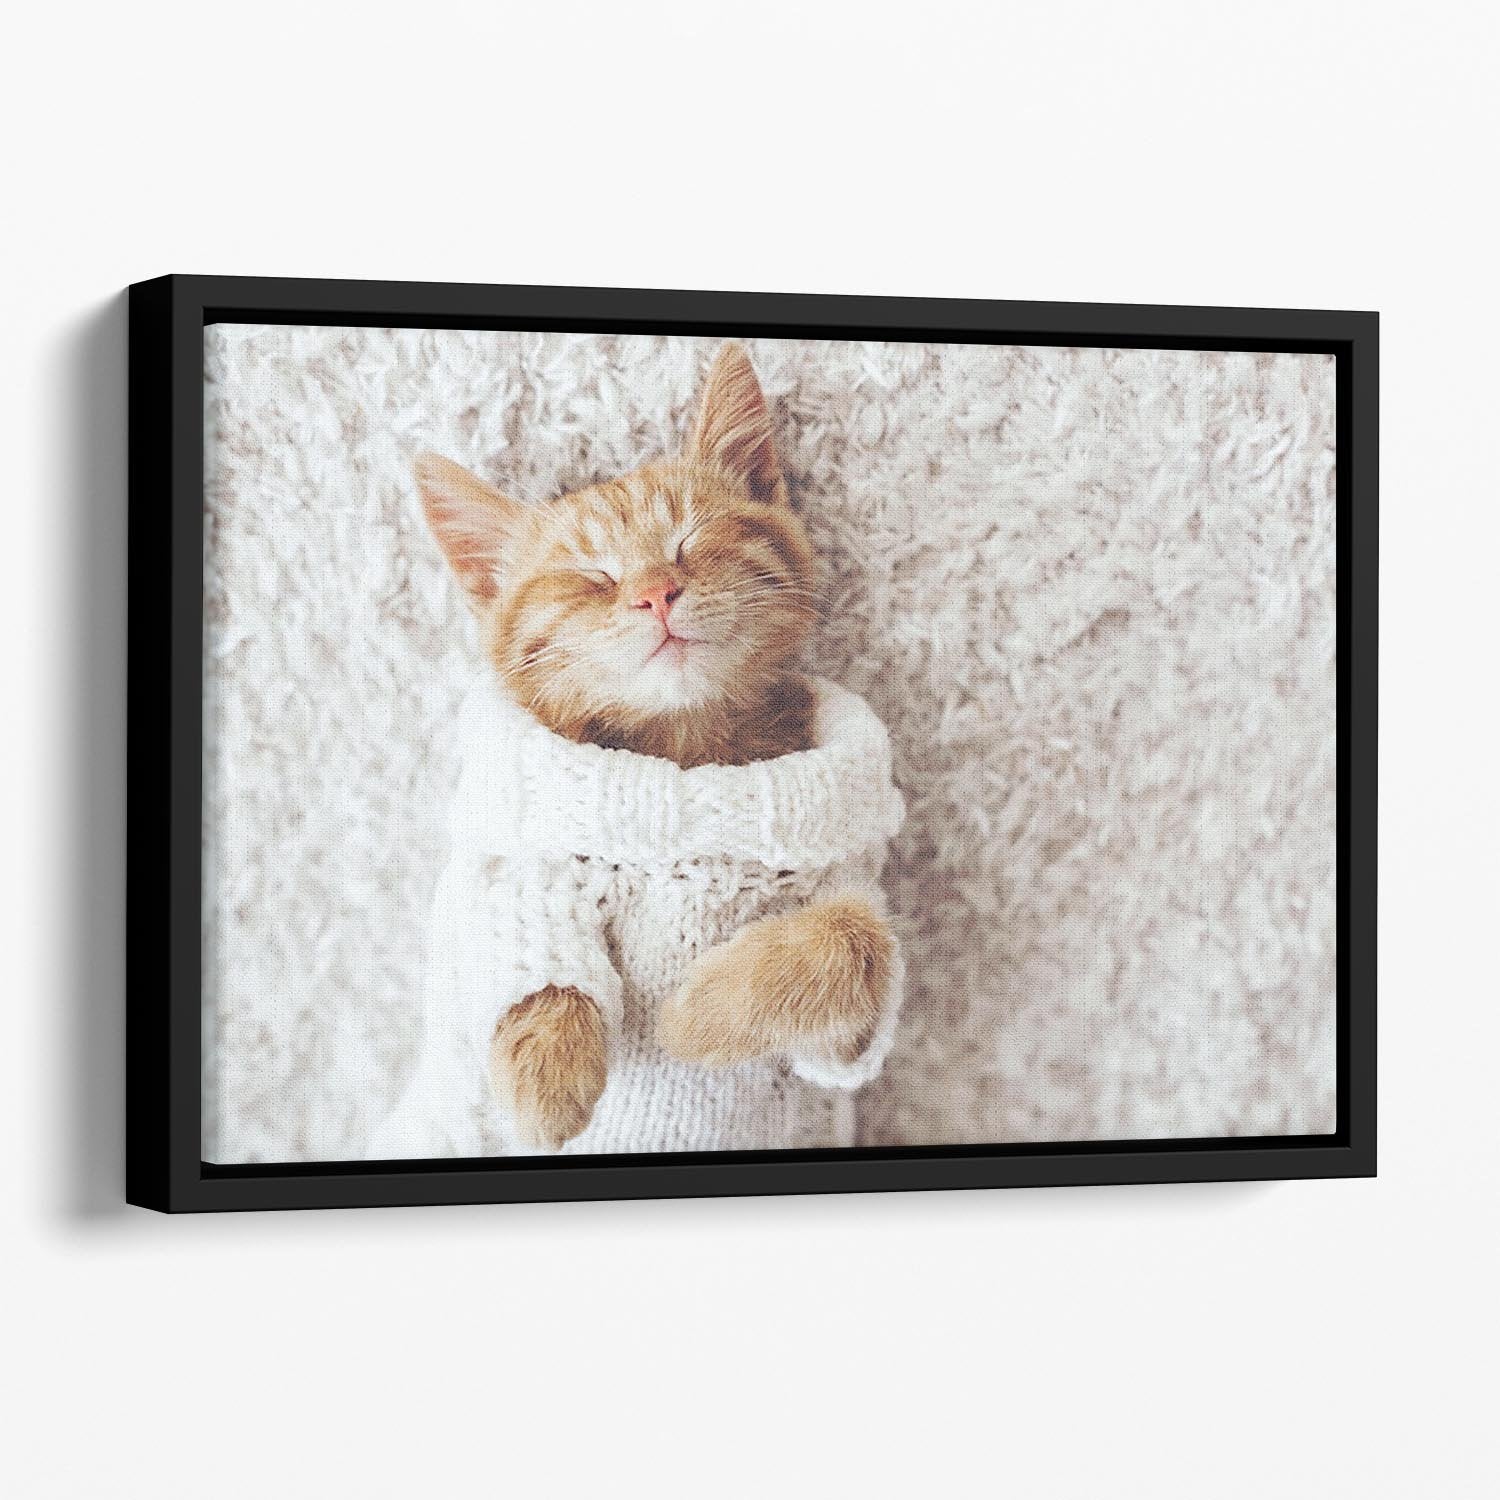 Cute little ginger kitten wearing warm knitted sweater Floating Framed Canvas - Canvas Art Rocks - 1